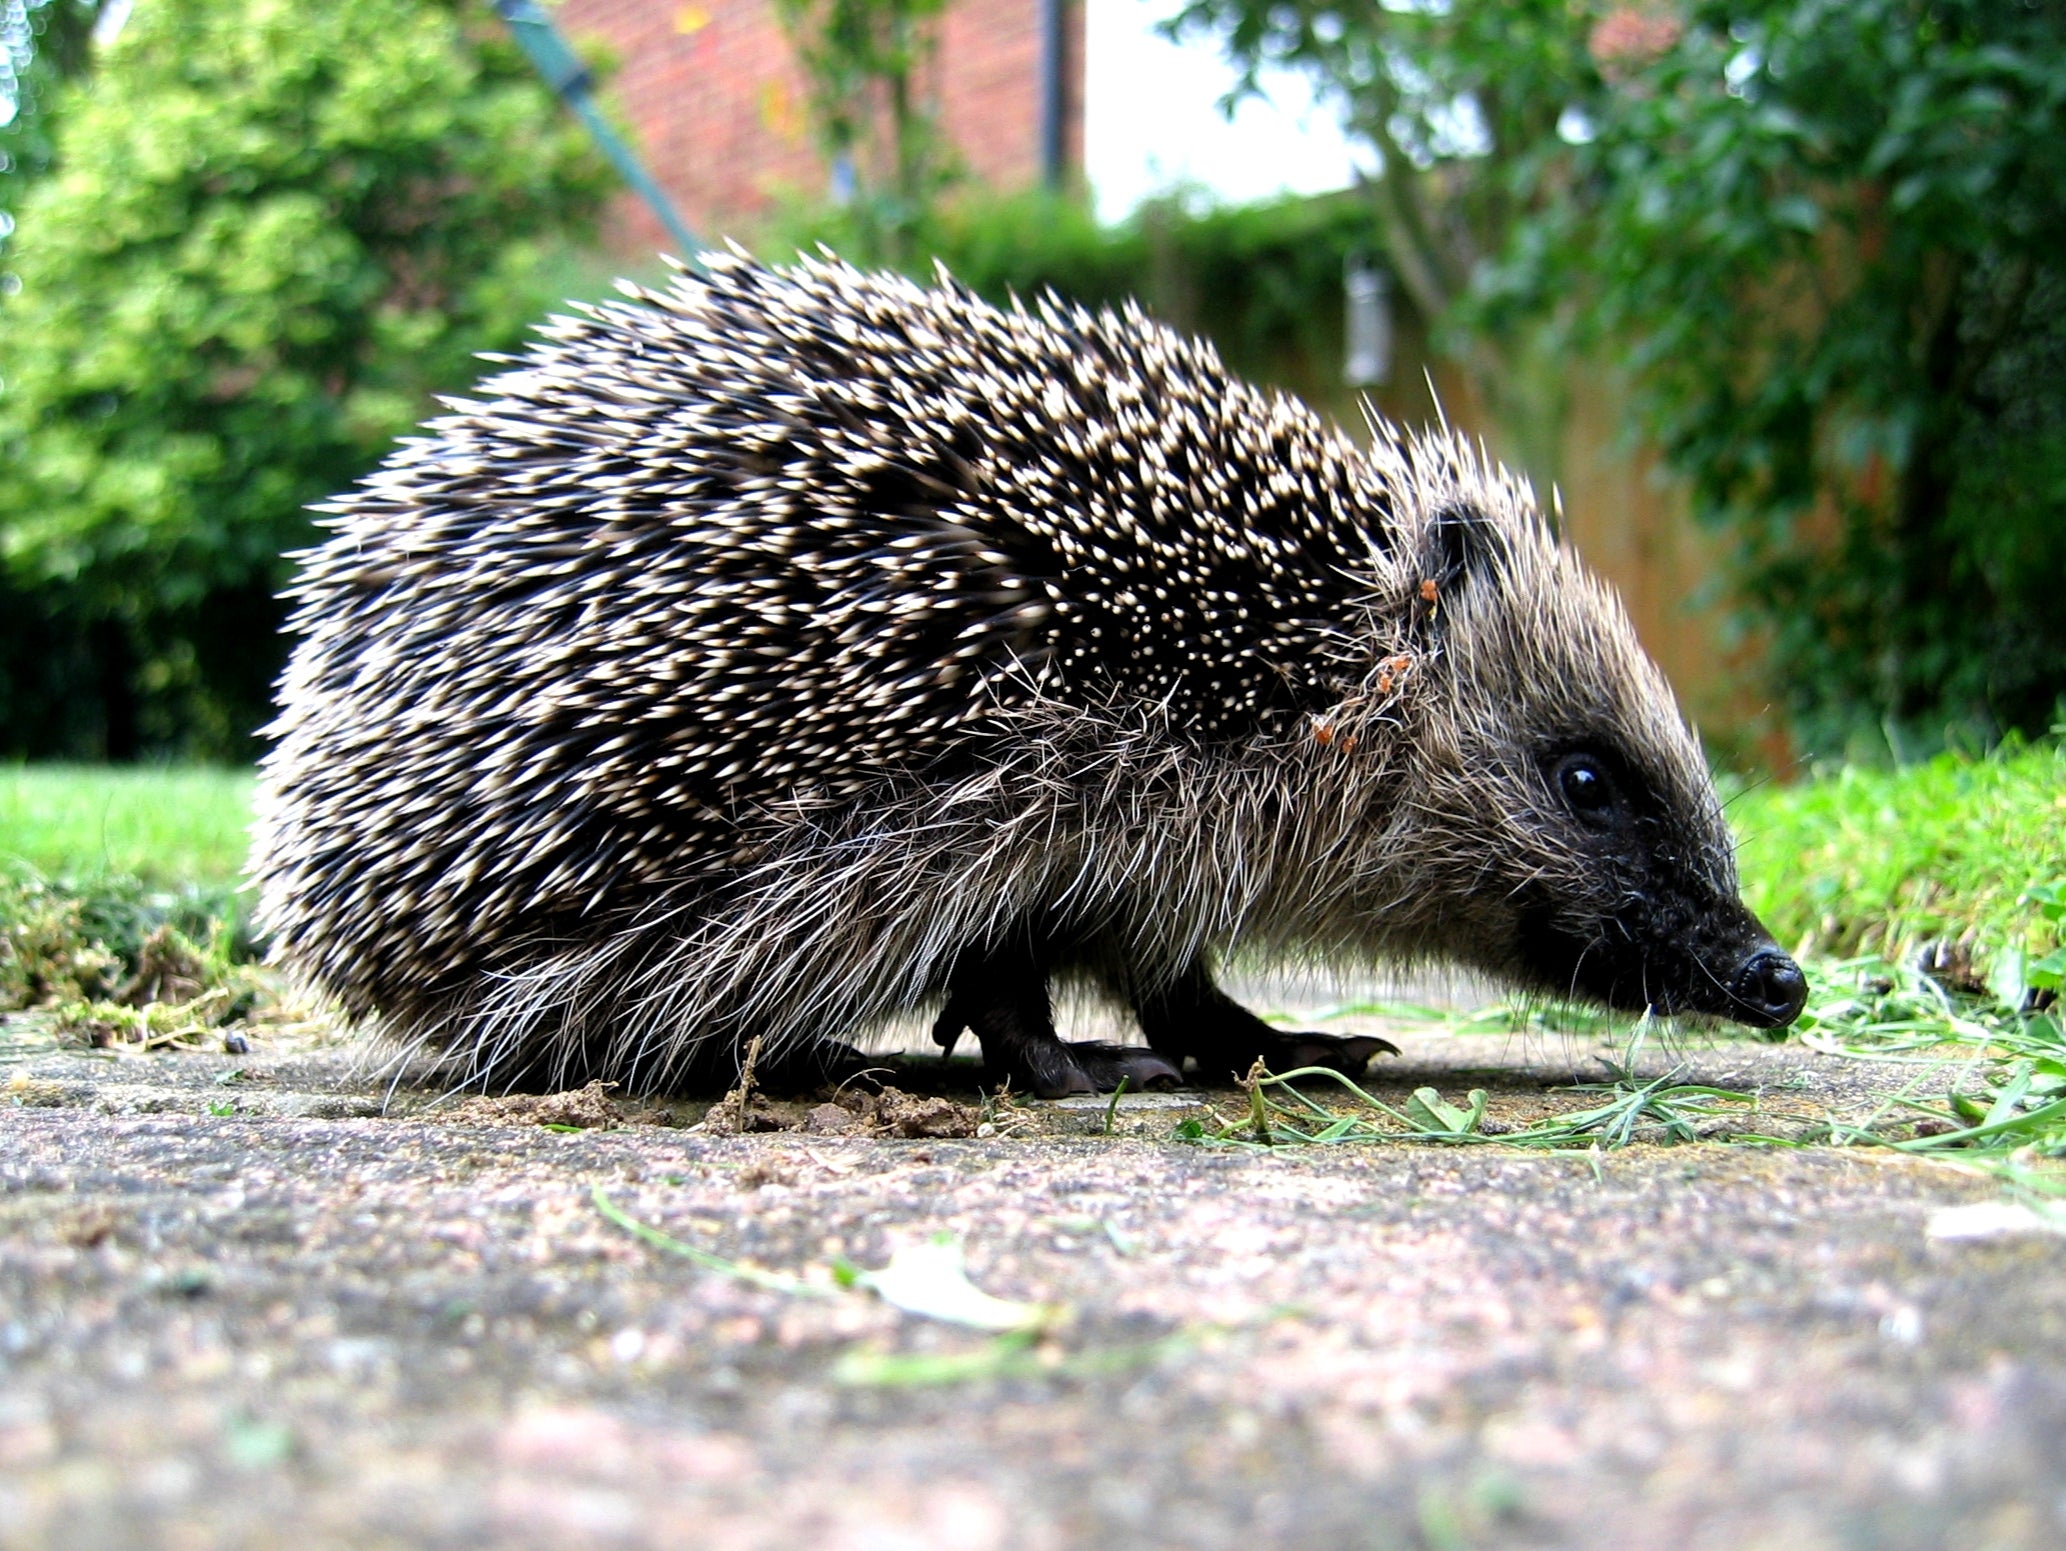 The UK’s hedgehog population has decreased since the millennium